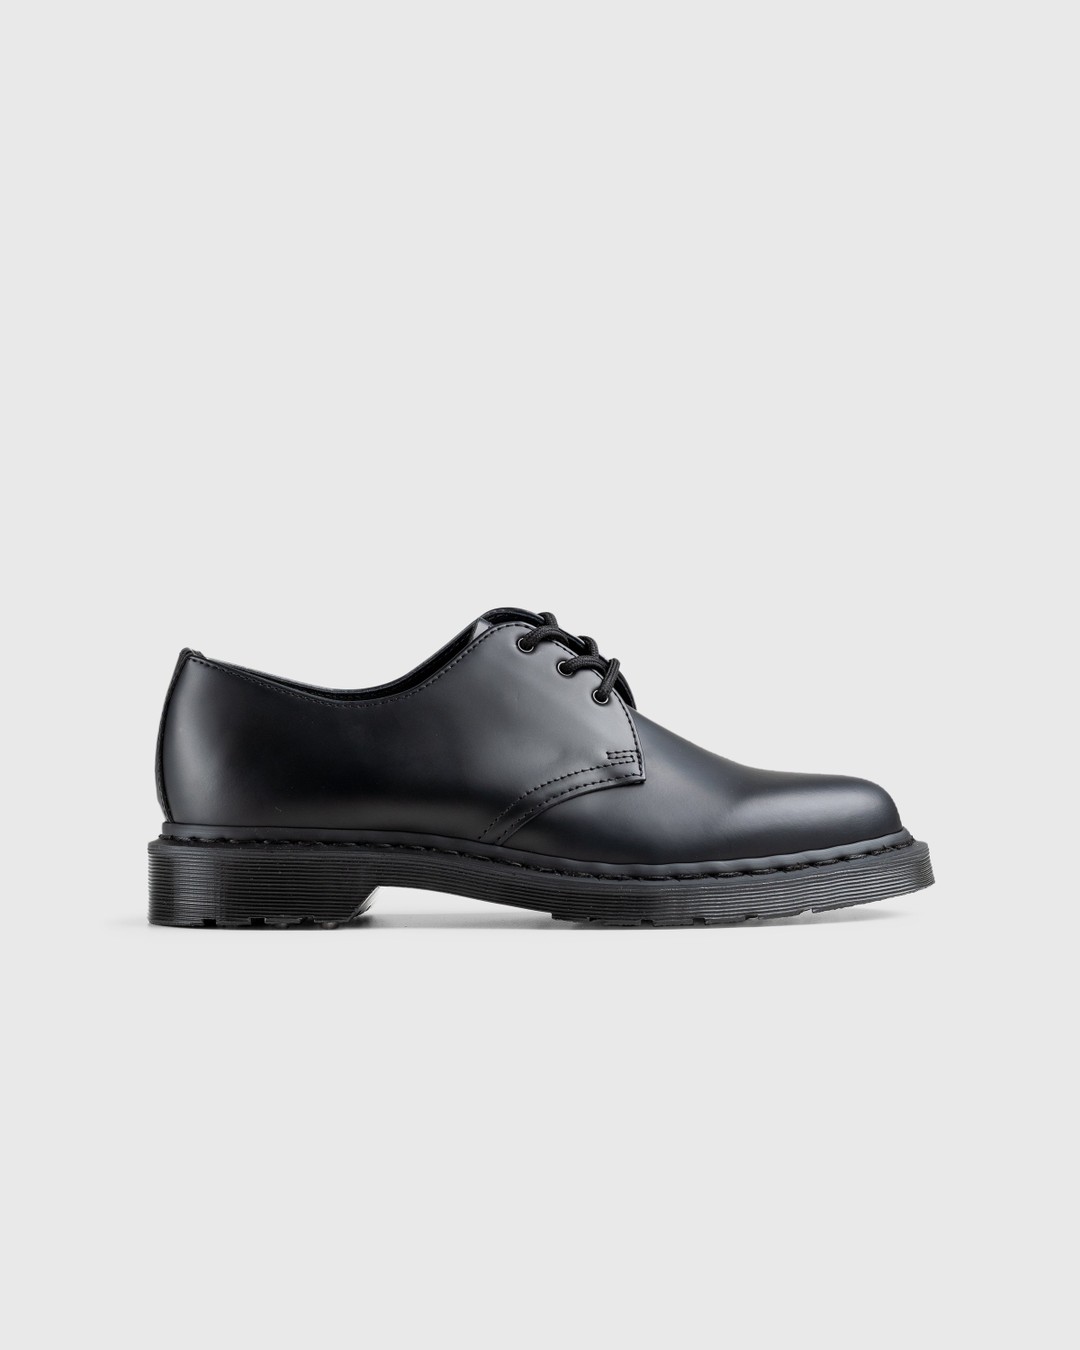 Dr. Martens – 1461 Mono Black Smooth - Shoes - Black - Image 1